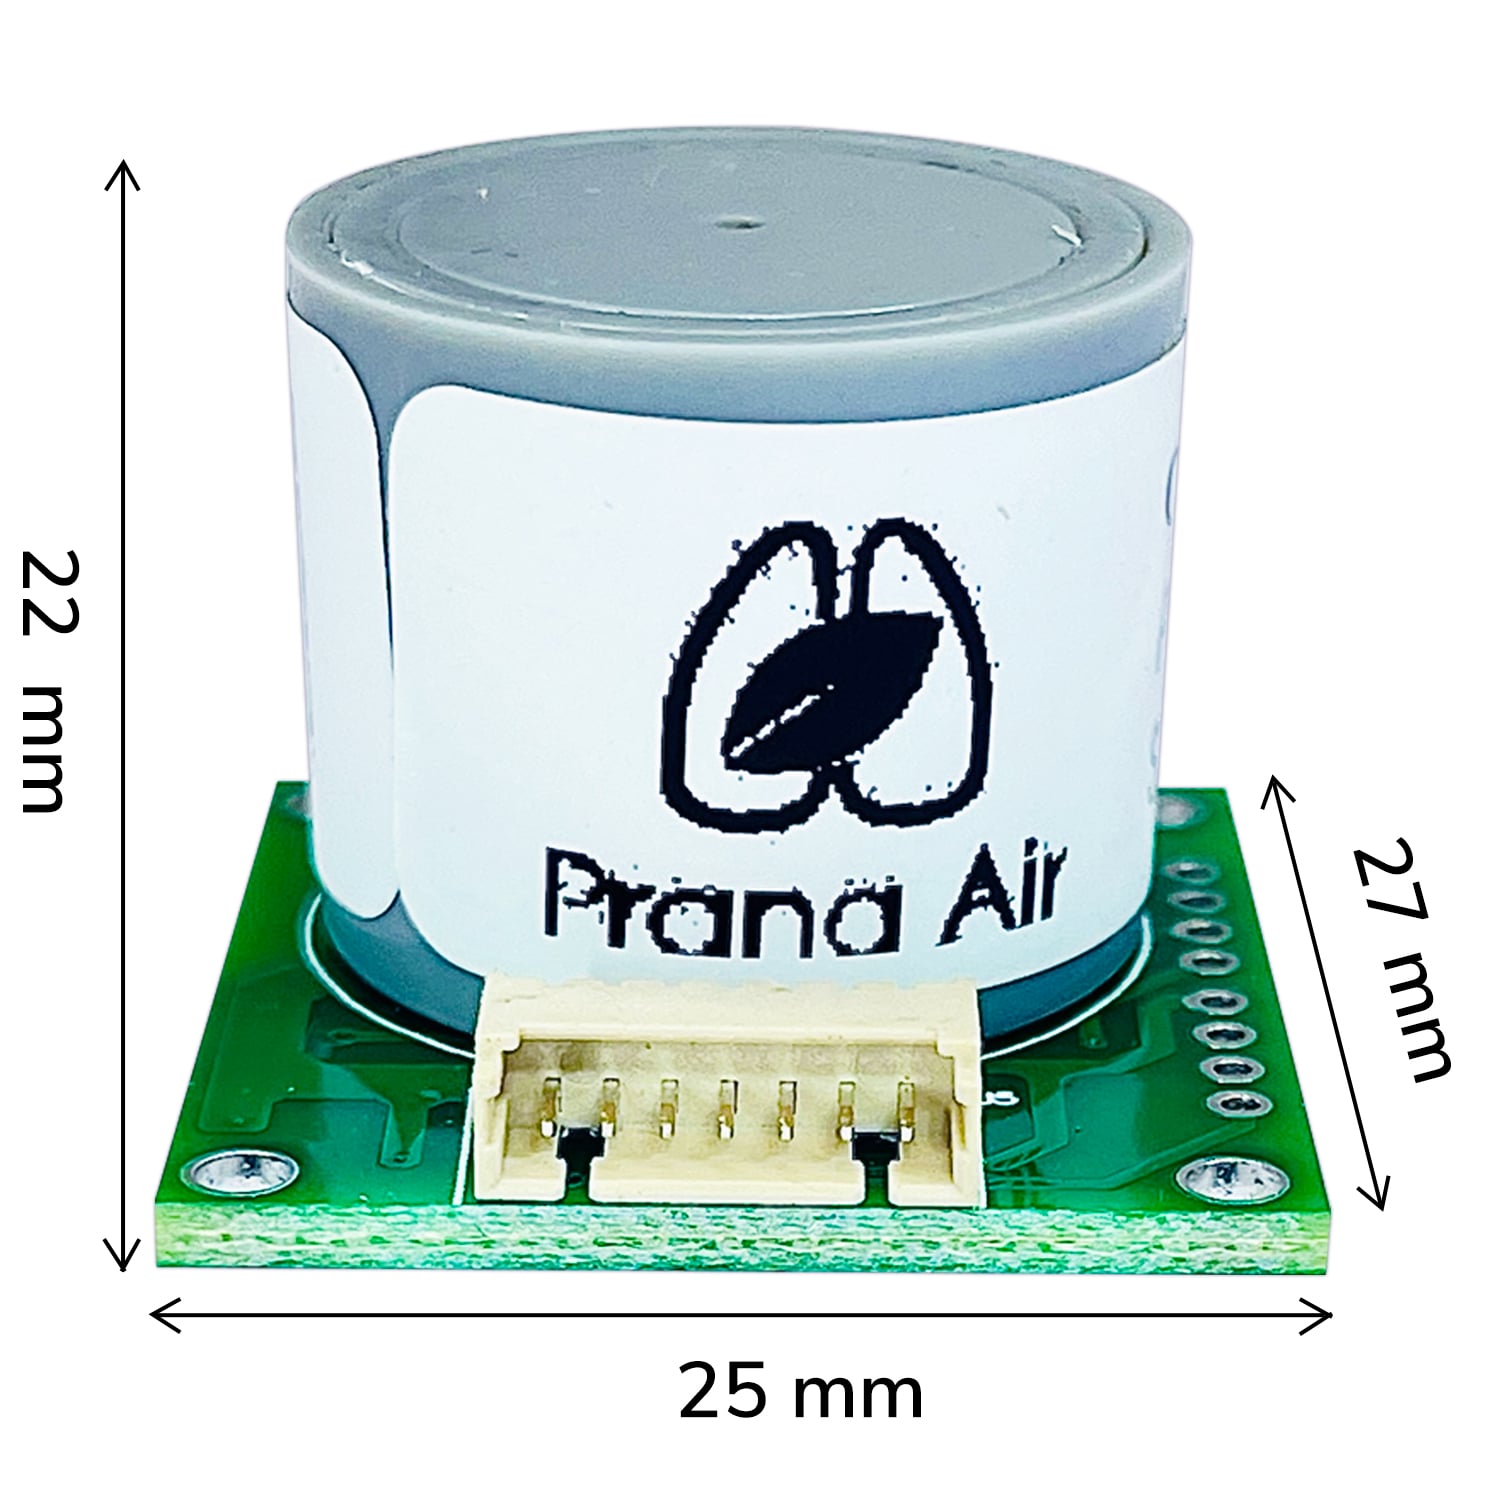 prana air sulfur ioxide so2 sensor with board